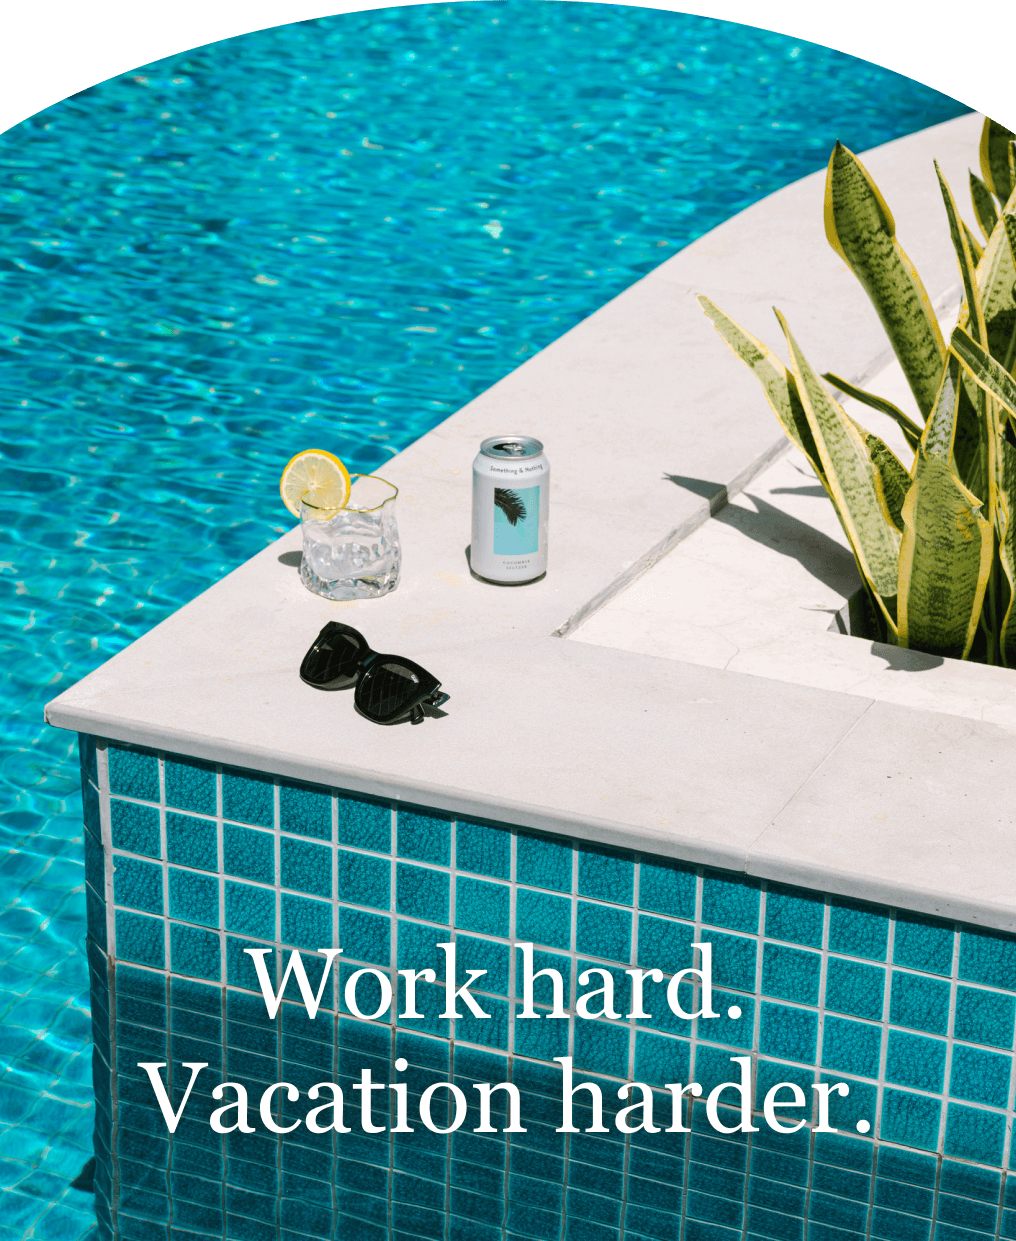 Work hard. Vacation harder.